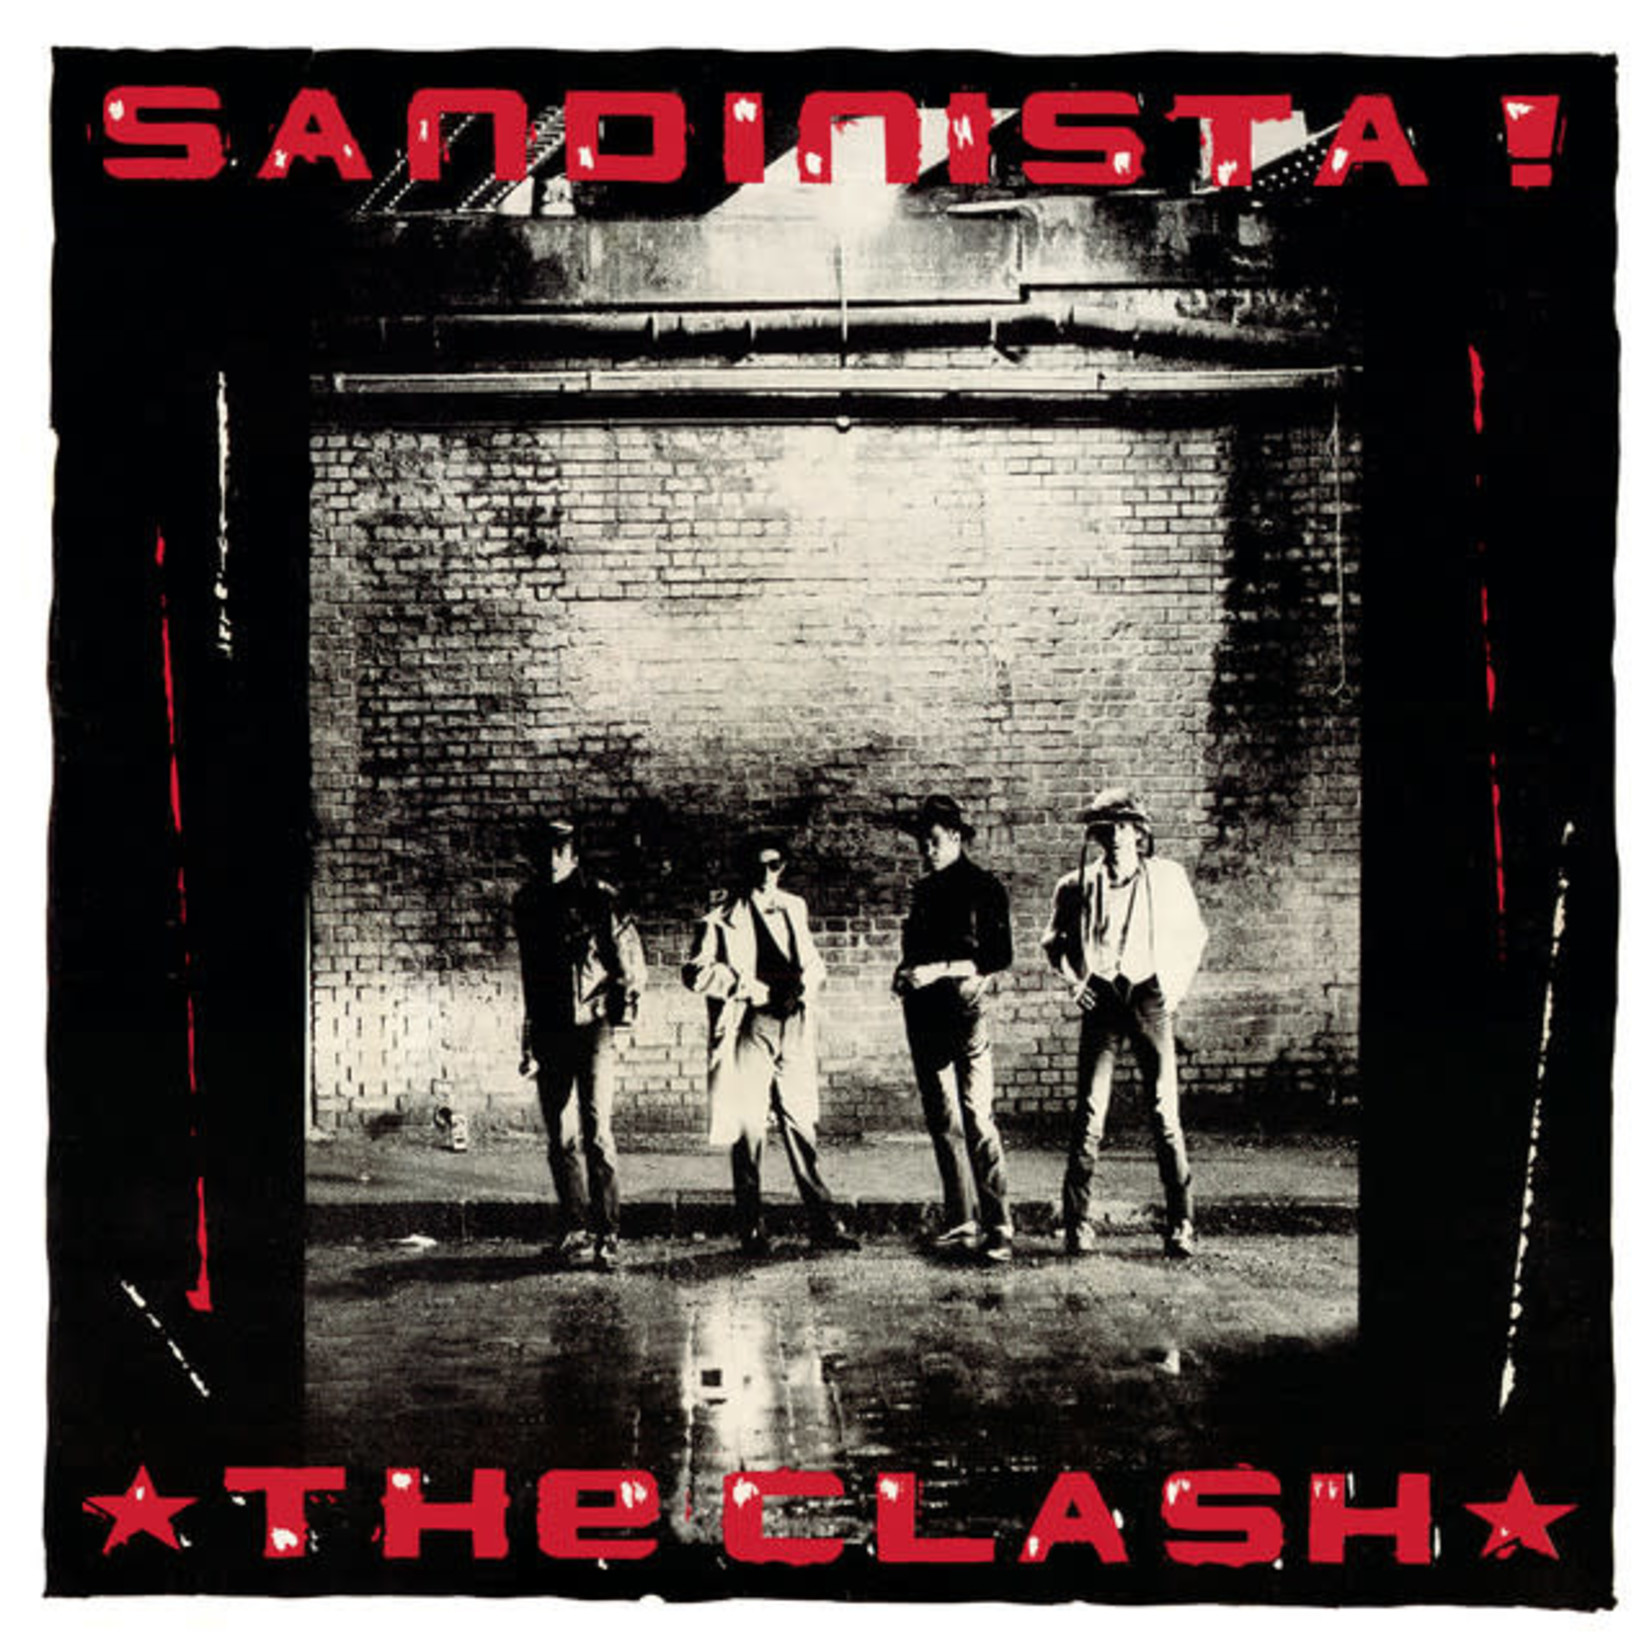 Vinyl The Clash - Sandinista - Remastered 180g